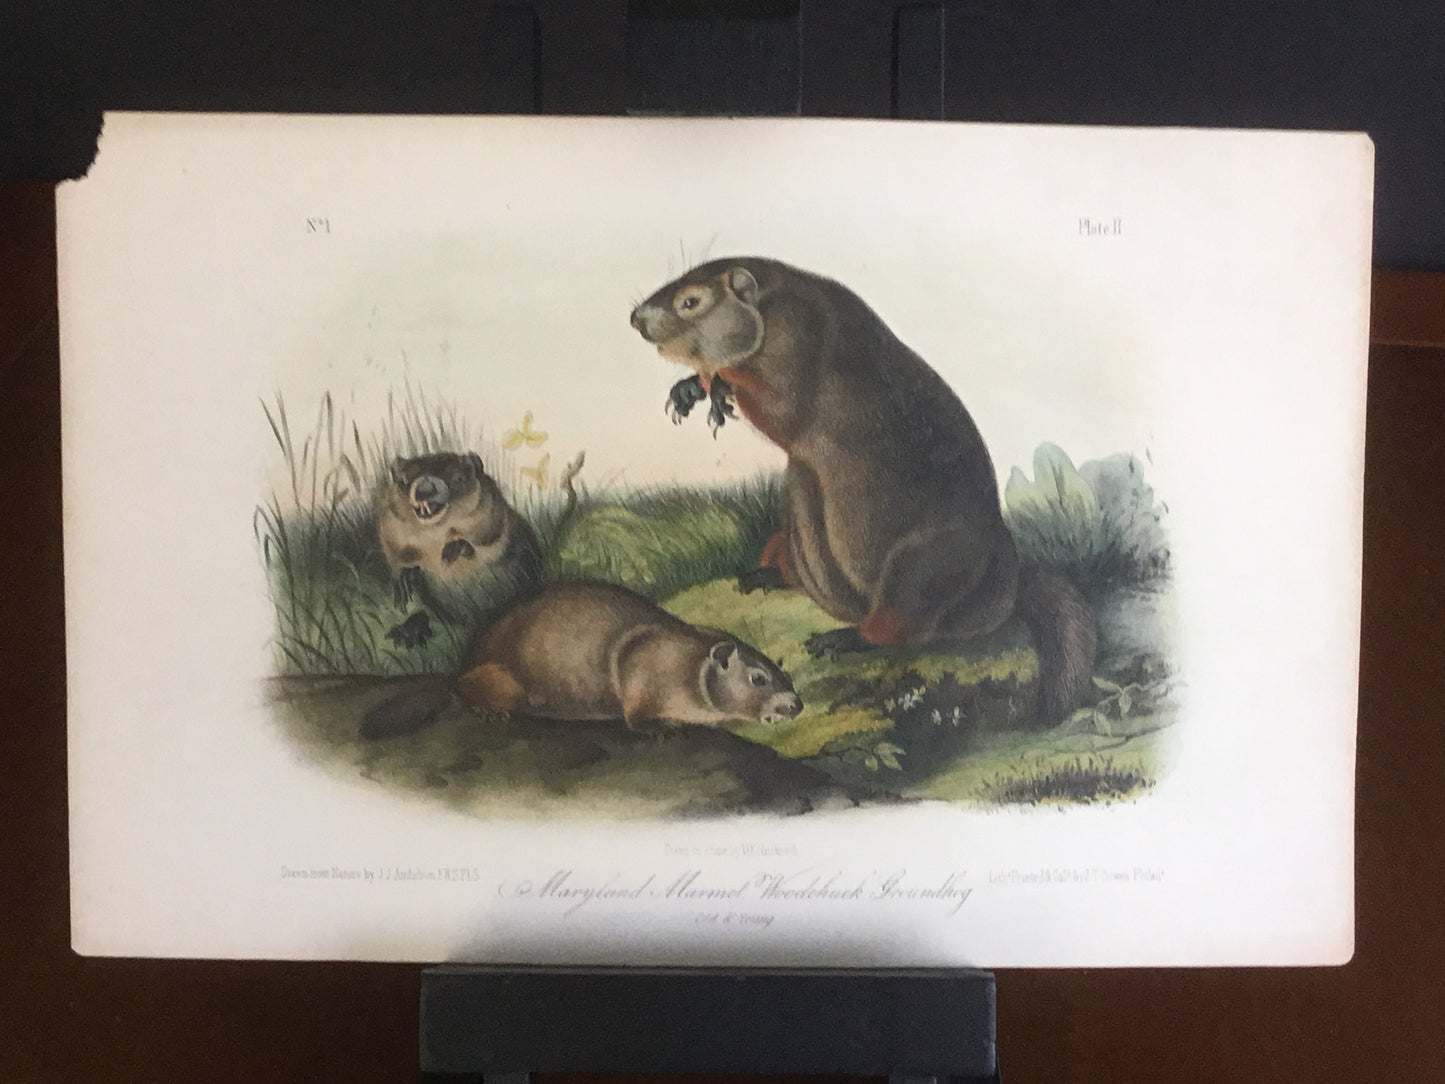 
                  
                    lord-Hopkins Collection Audubon Octavo Quadruped - Maryland Marmot Woodchuck Groundhog
                  
                